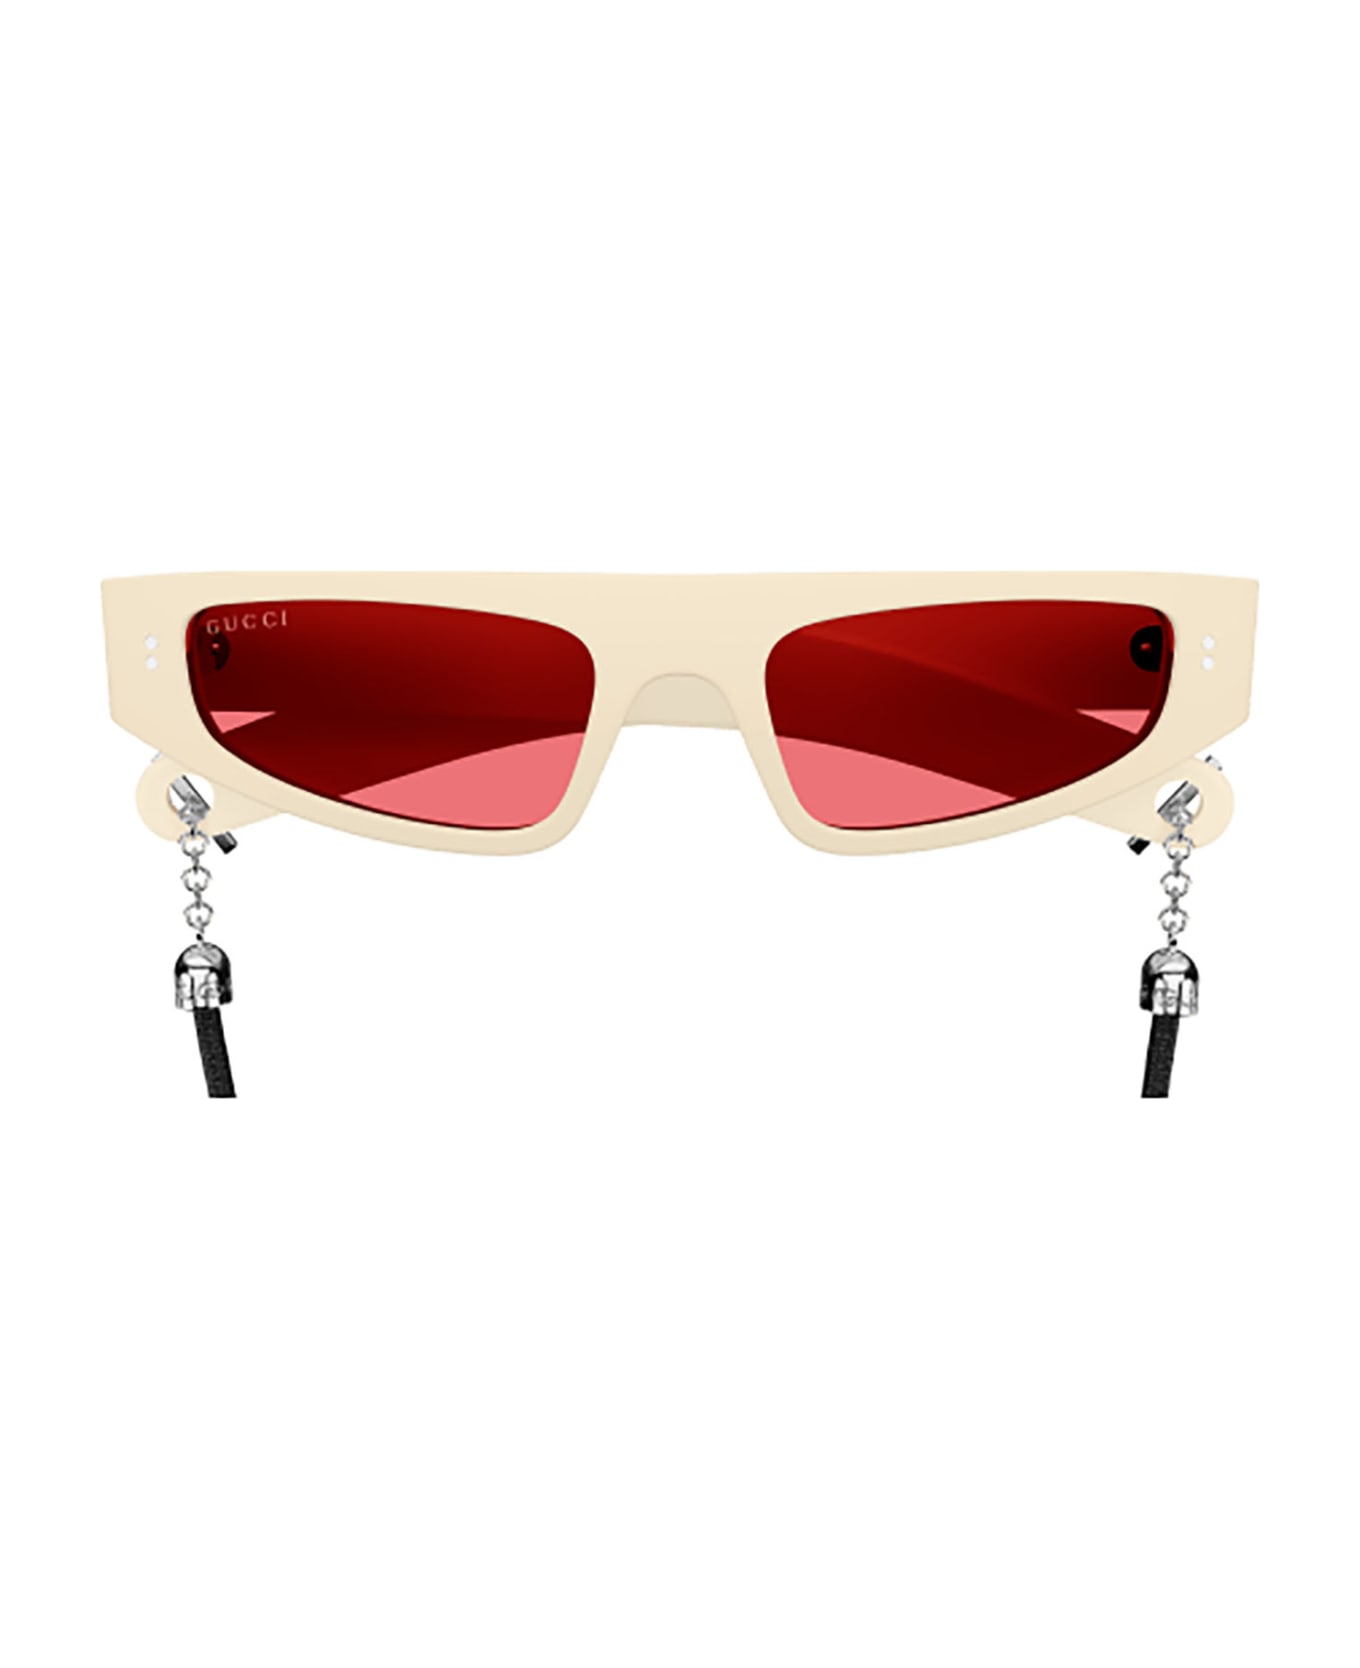 Gucci Eyewear GG1634S Sunglasses - Ivory Ivory Red サングラス